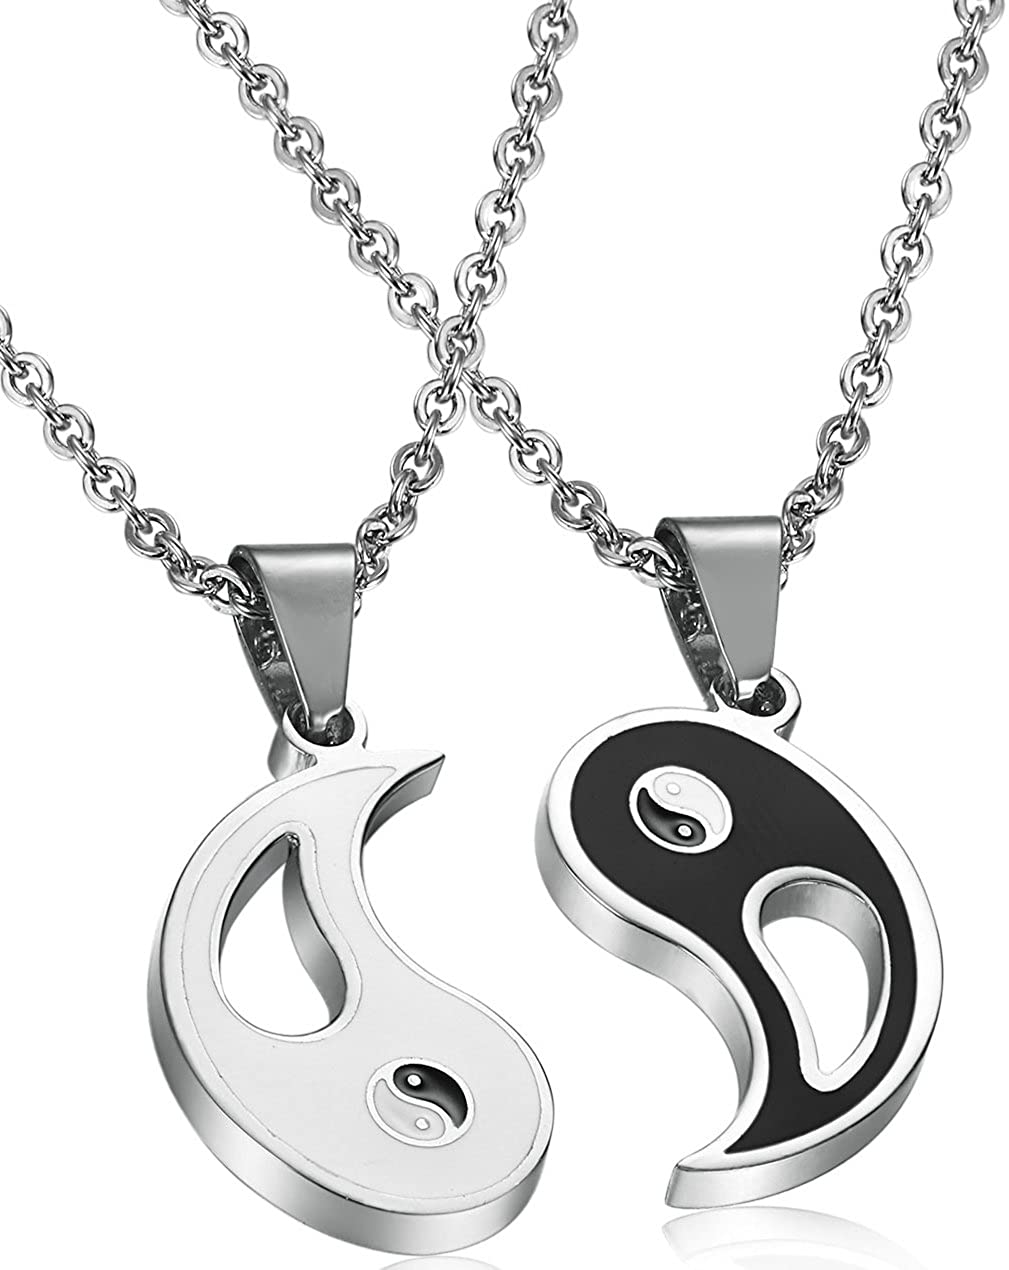 FIBO STEEL 2pcs Stainless Steel Yin Yang Pendant Necklace